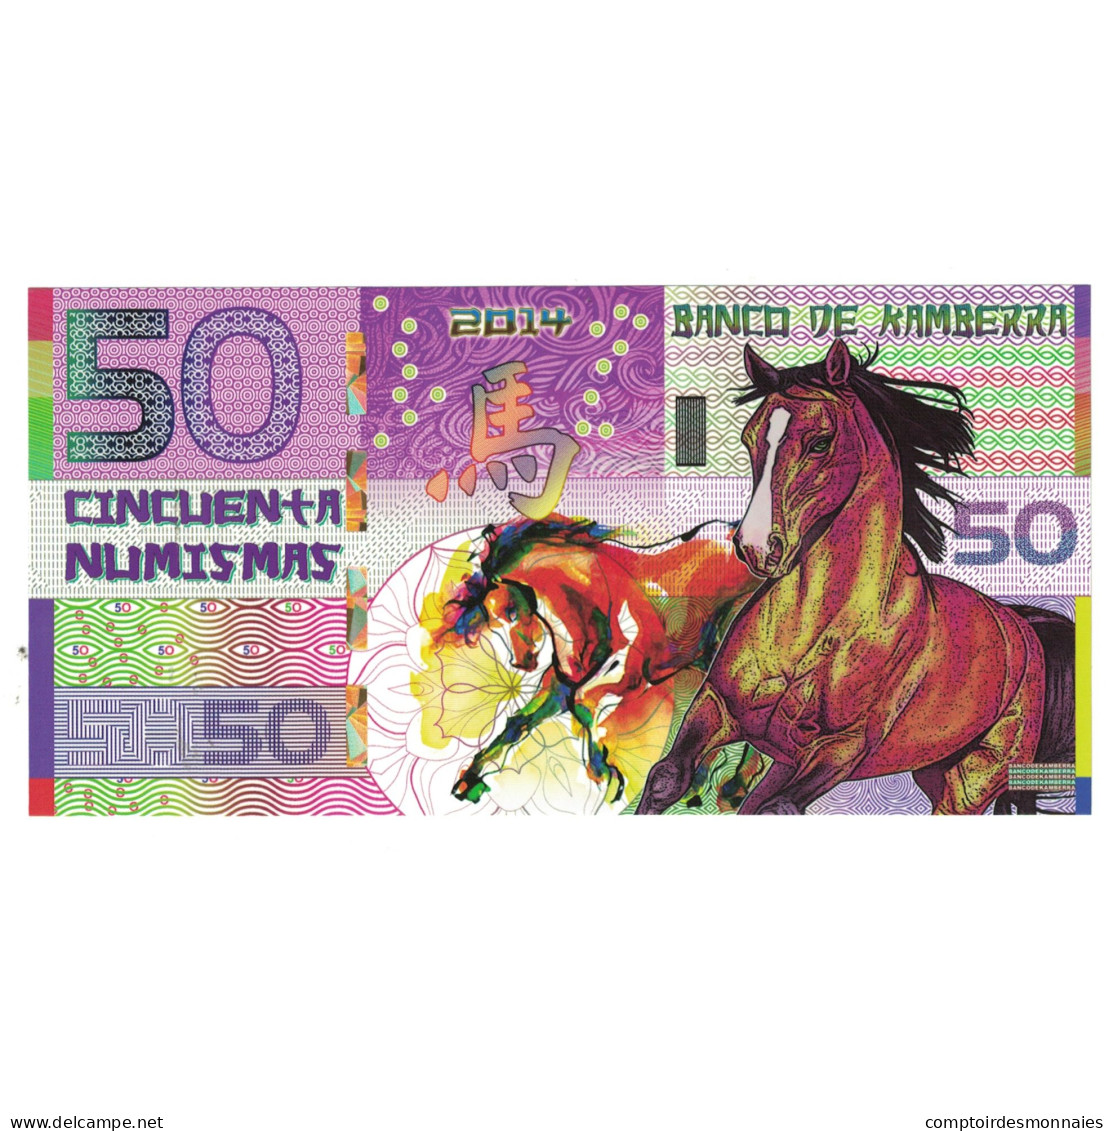 Billet, Australie, Billet Touristique, 2014, 50 Dollars ,Colorful Plastic - Fakes & Specimens